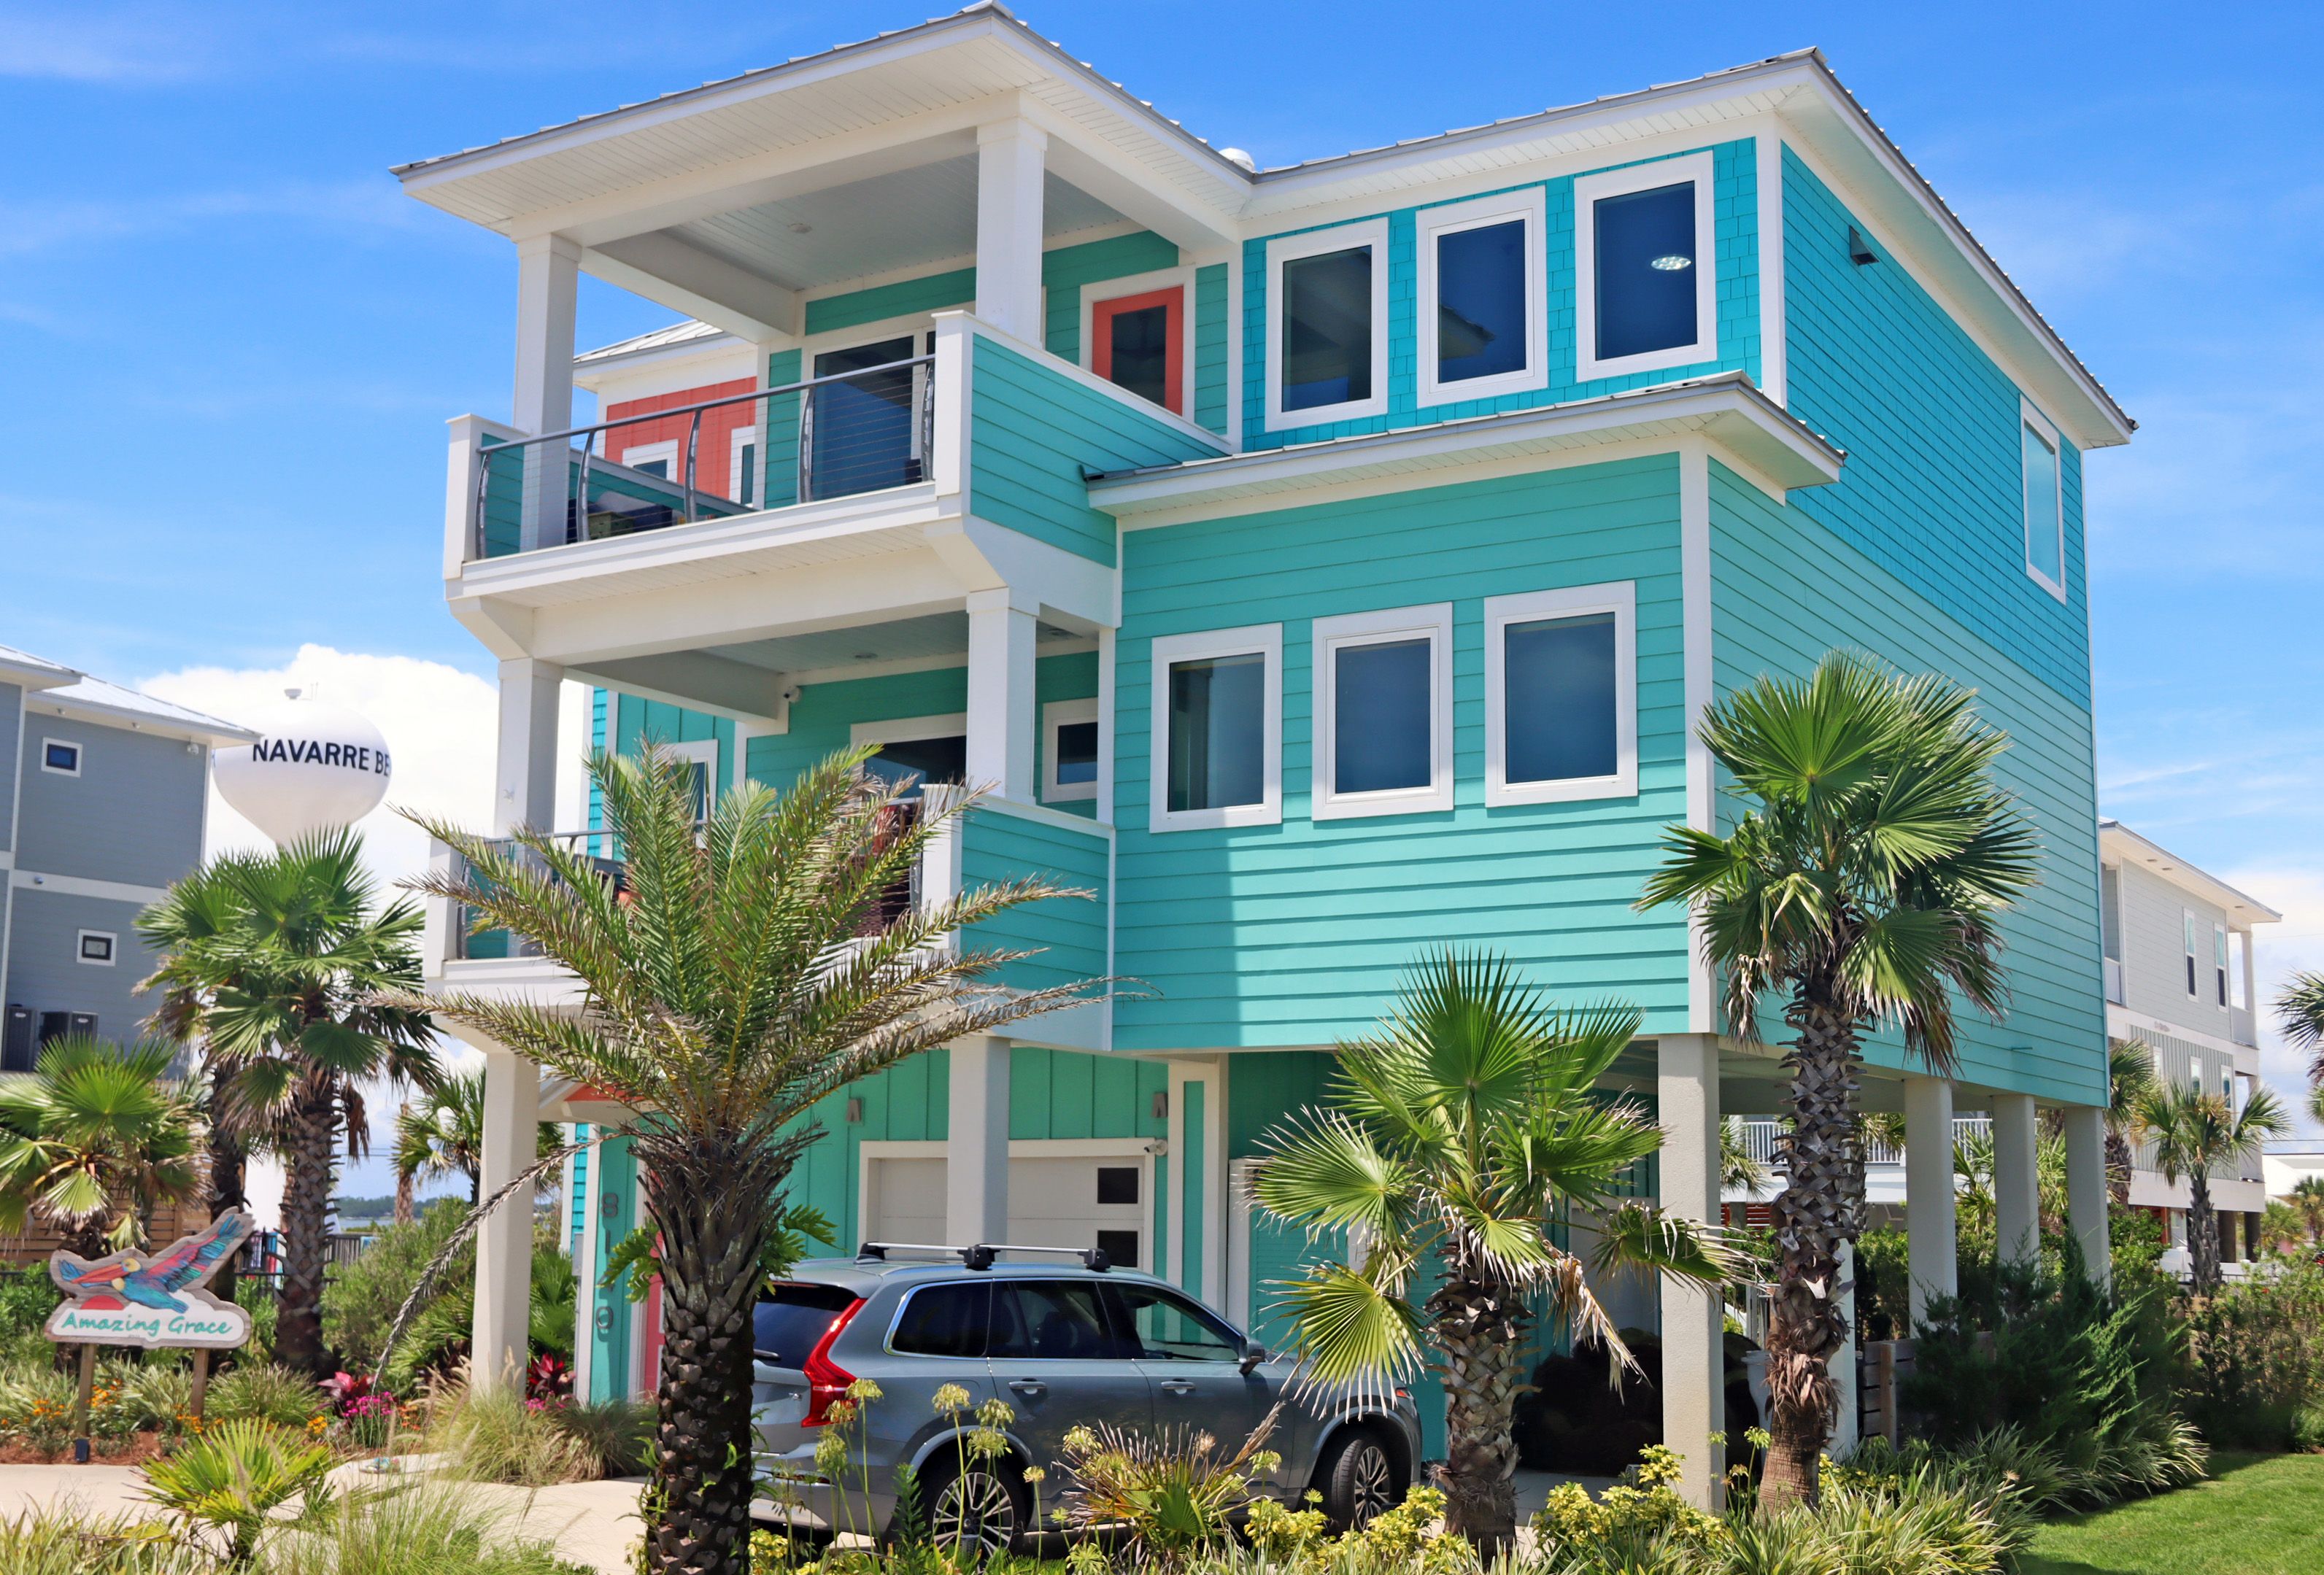 Frerich modern coastal piling home on Navarre Beach